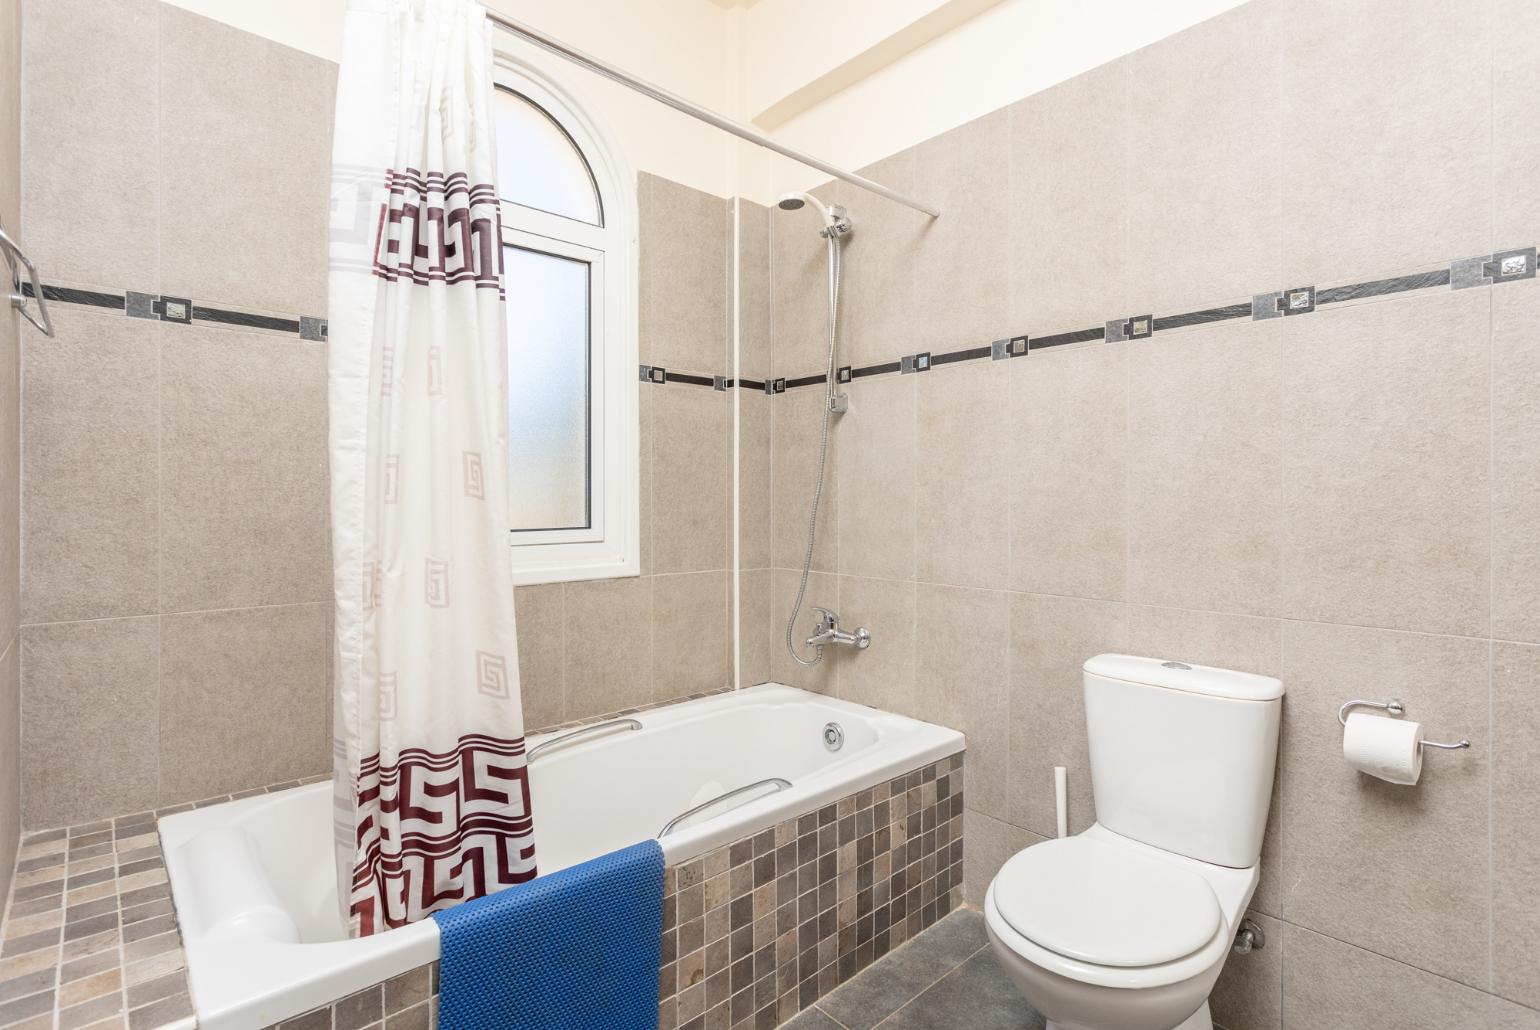 En suite bathroom with bath and shower